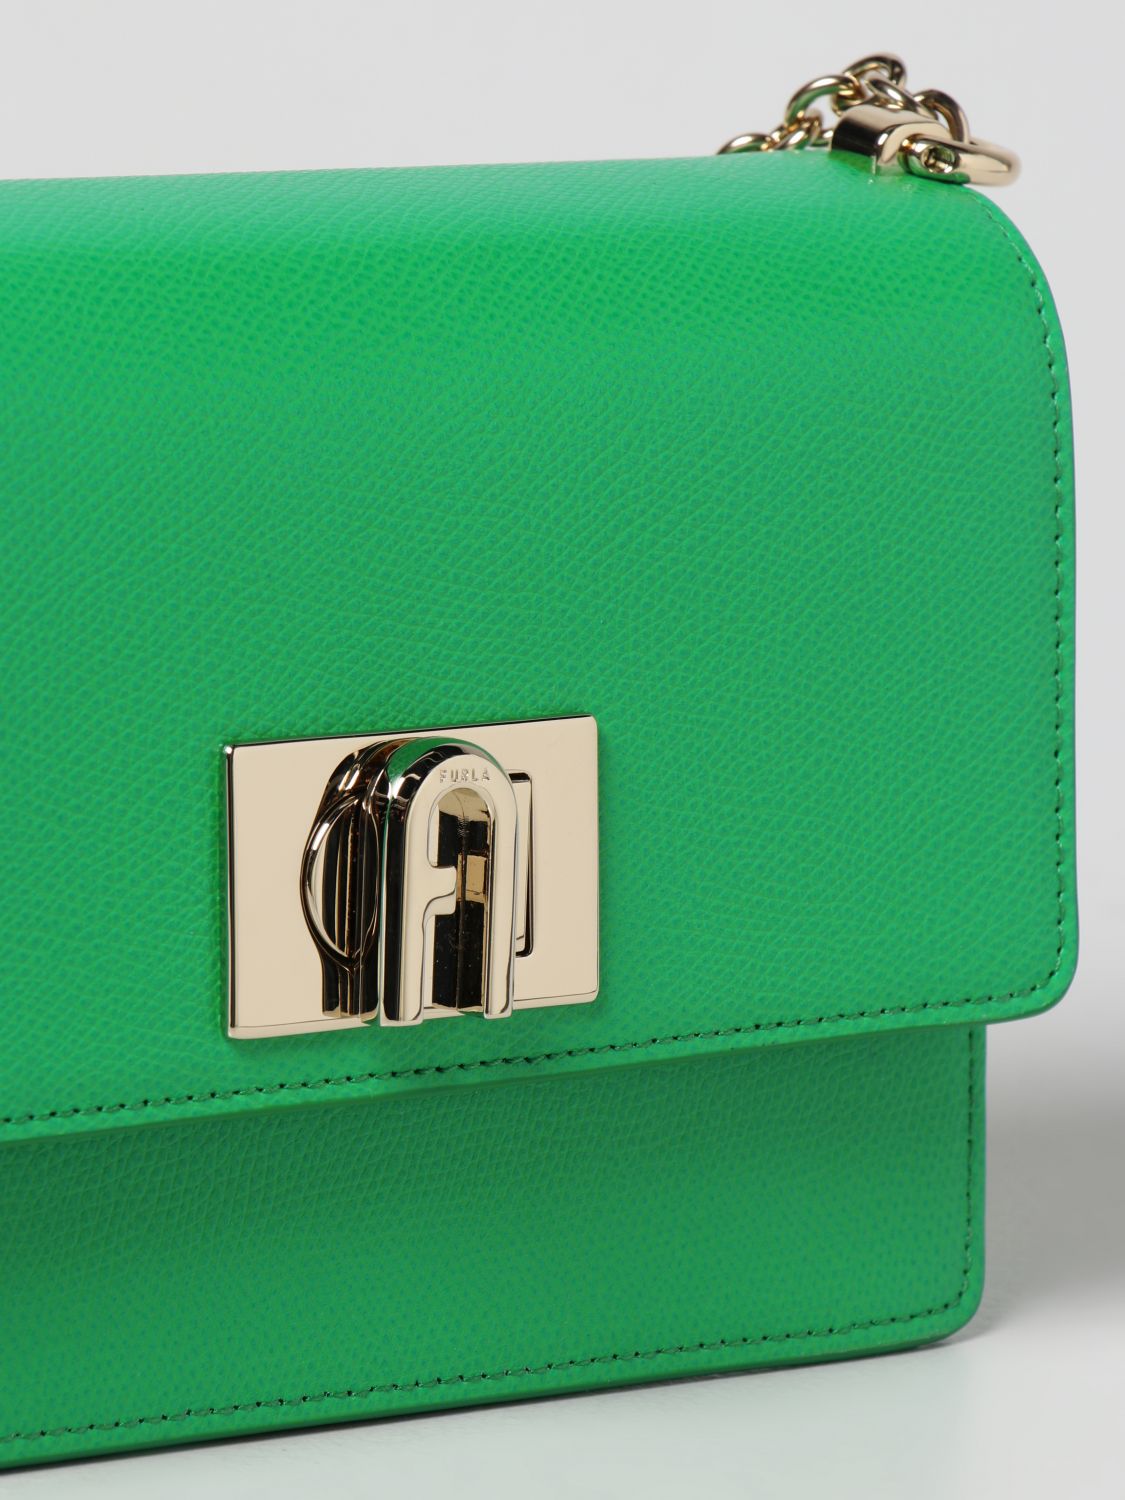 FURLA: 1927 leather bag - Green | Furla crossbody bags online on GIGLIO.COM